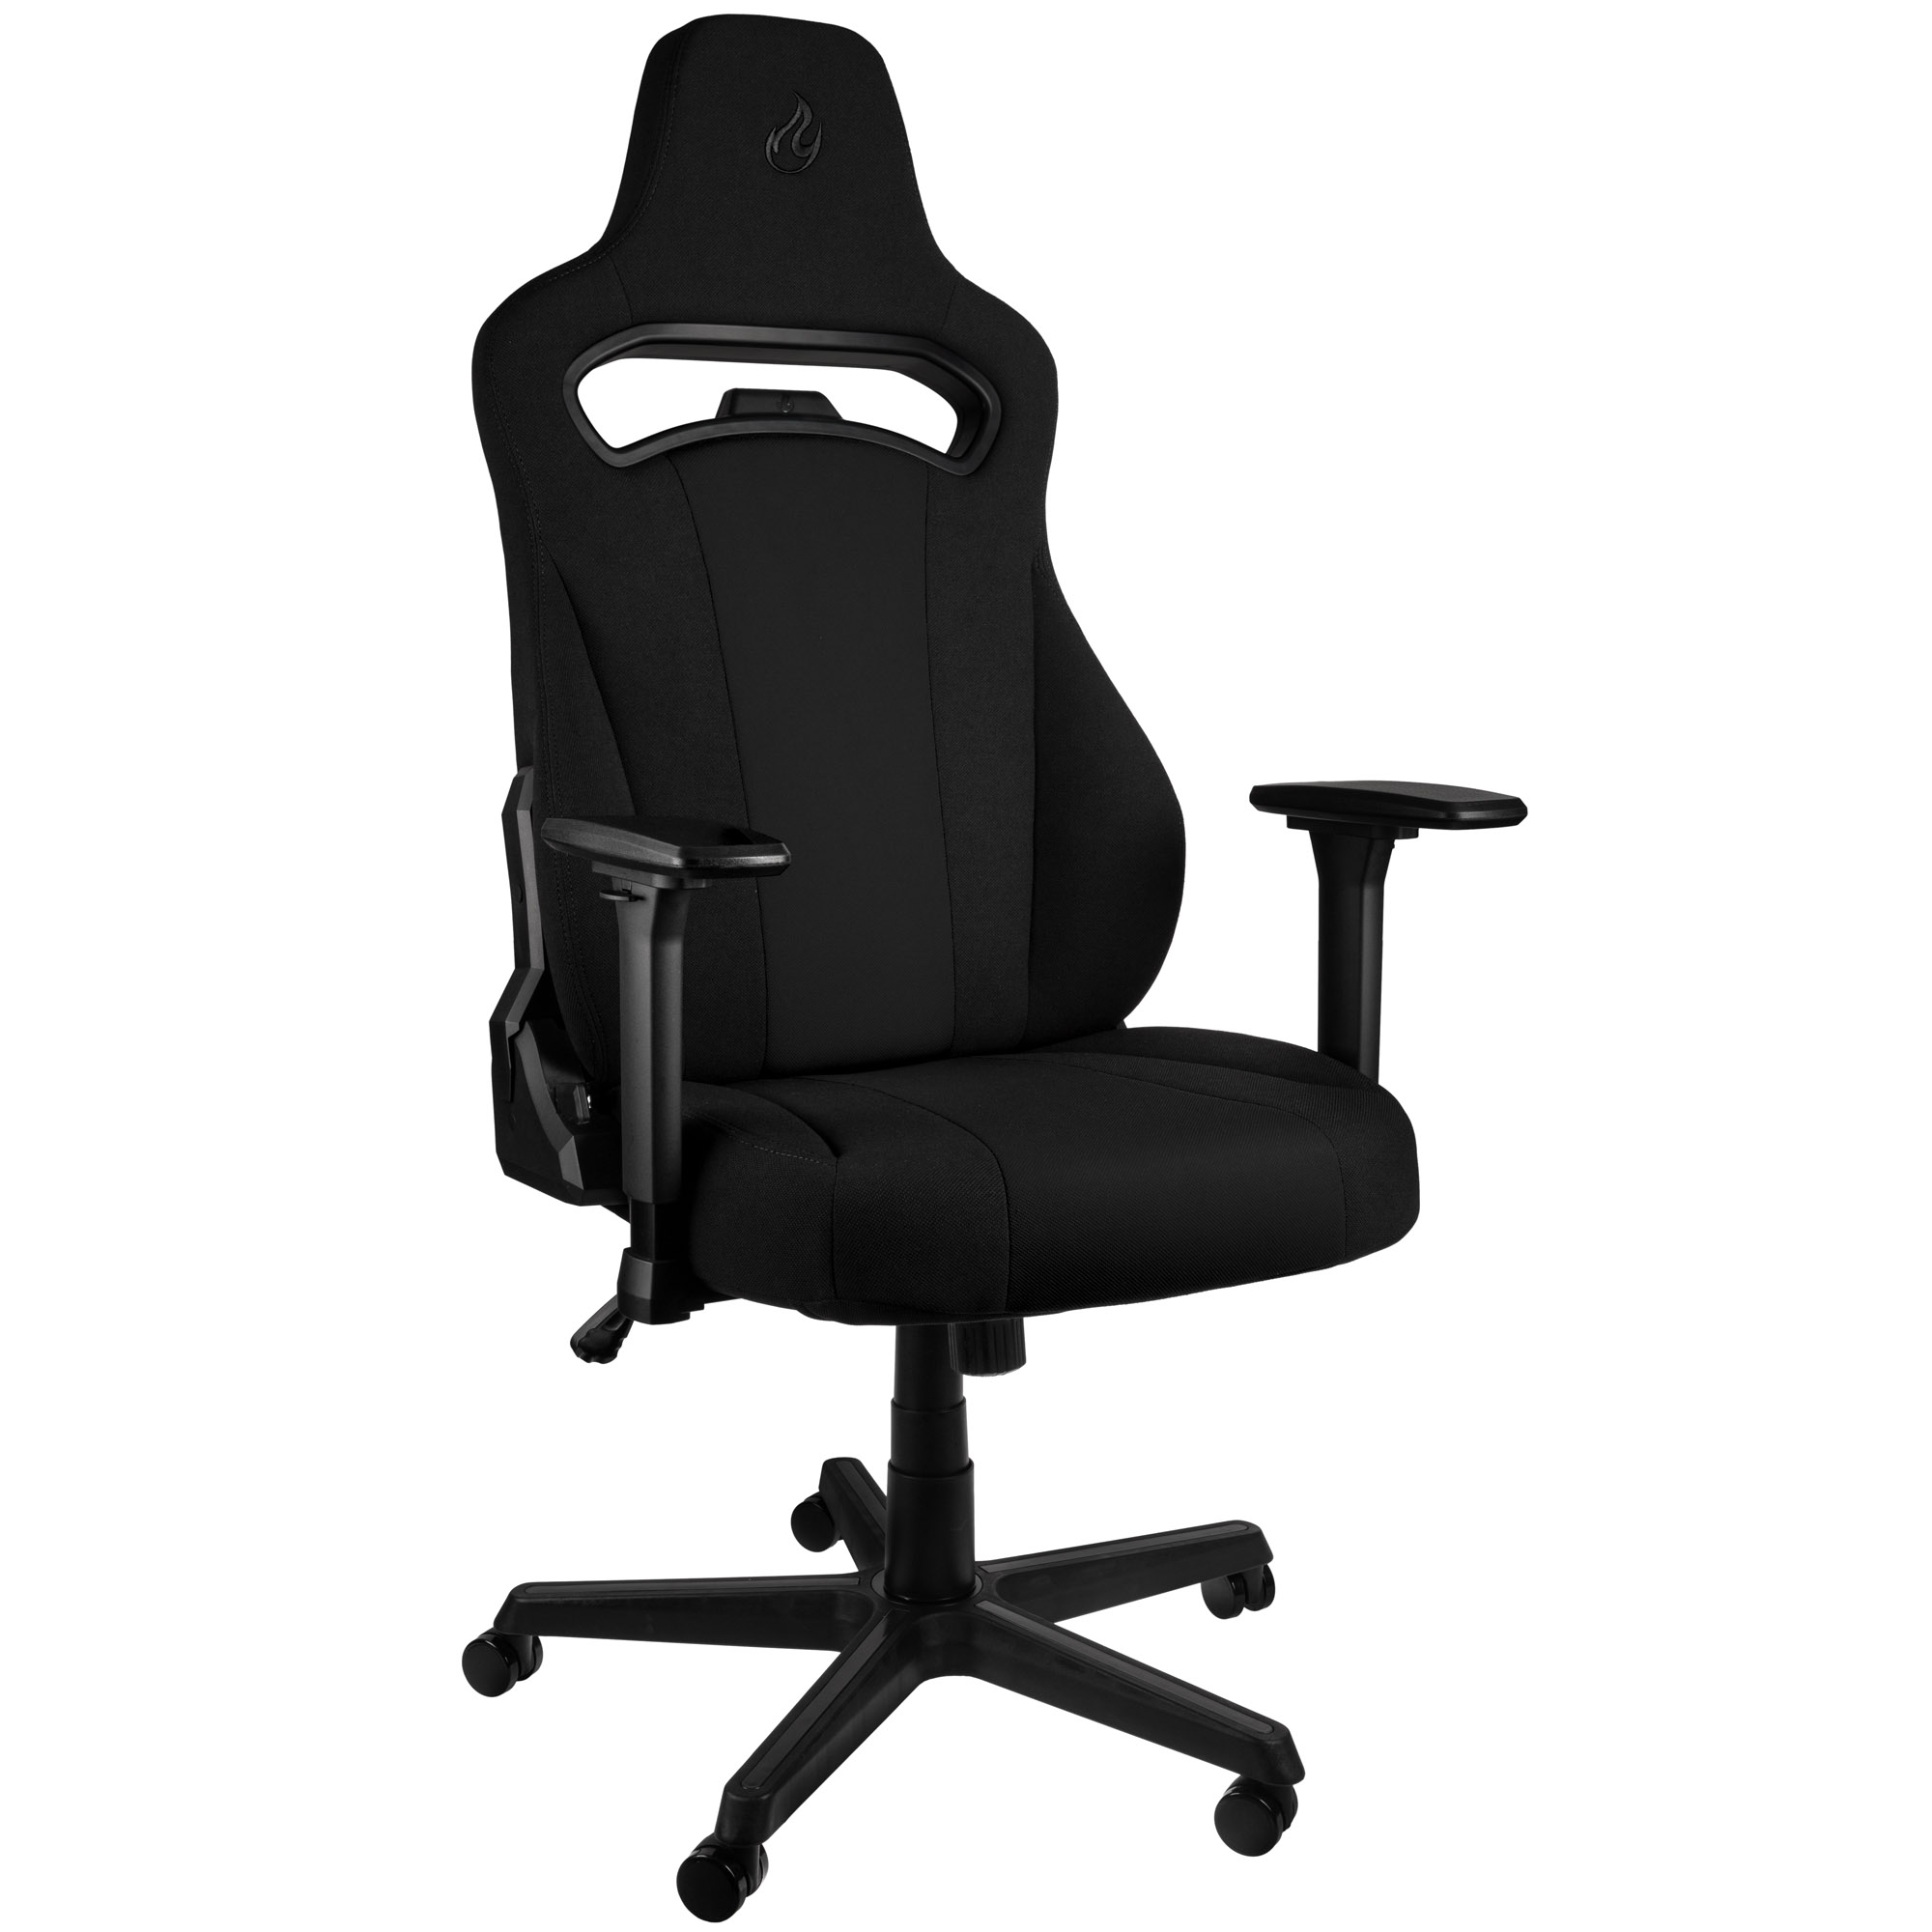 Nitro Concepts - E250 Gaming Chair - Black